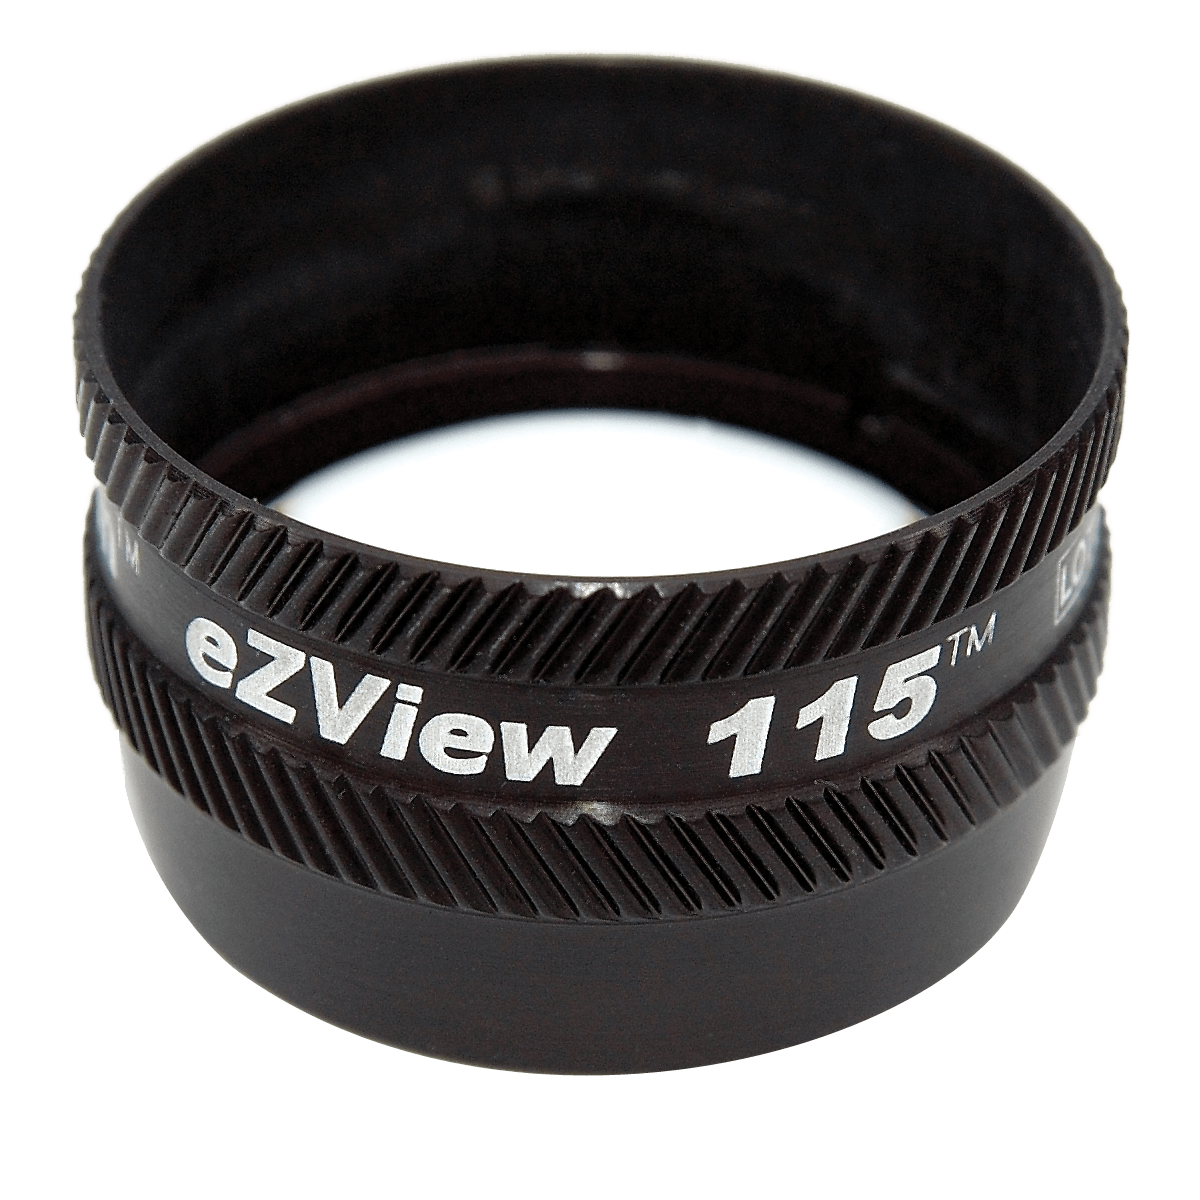 Good-Lite 995115-ION ezView 115 Advanced Non-Contact Slit Lamp Lens ION eZView 115 Advanced Non-Contact Slit Lamp Lens